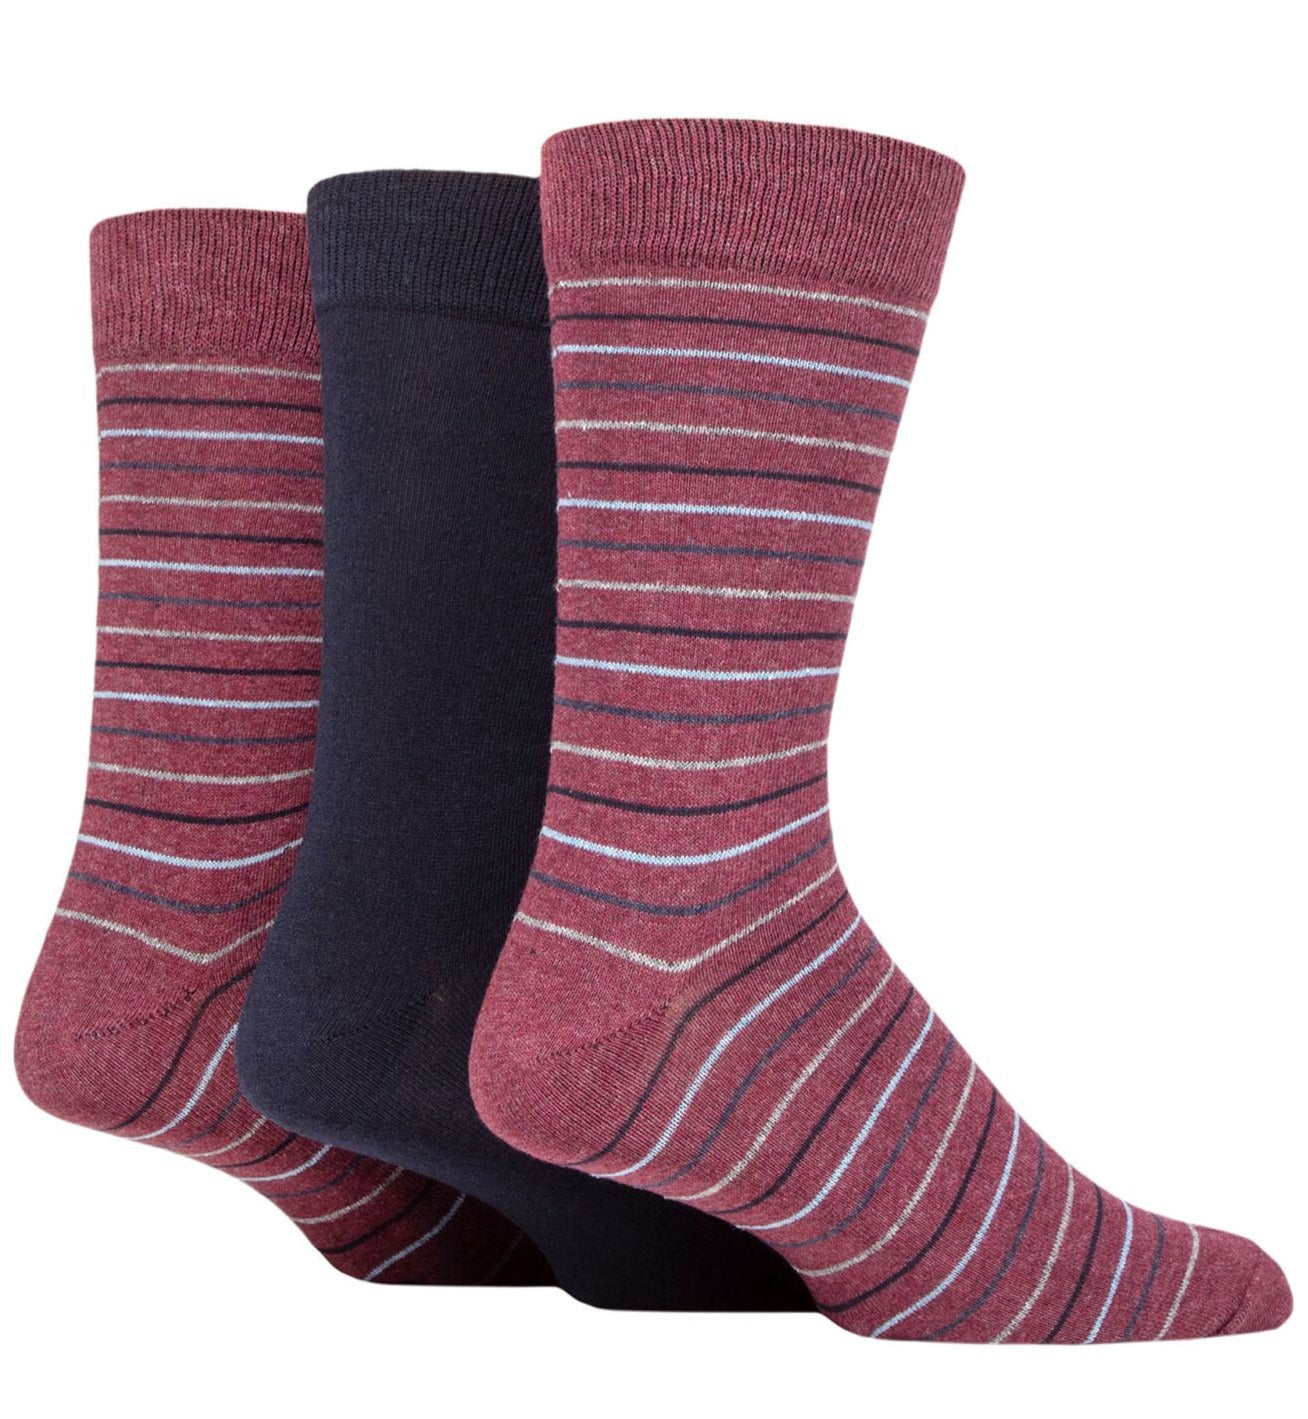 TORE 3Pk 100% Recycled Fashion Fine Stripes Socks - Men's